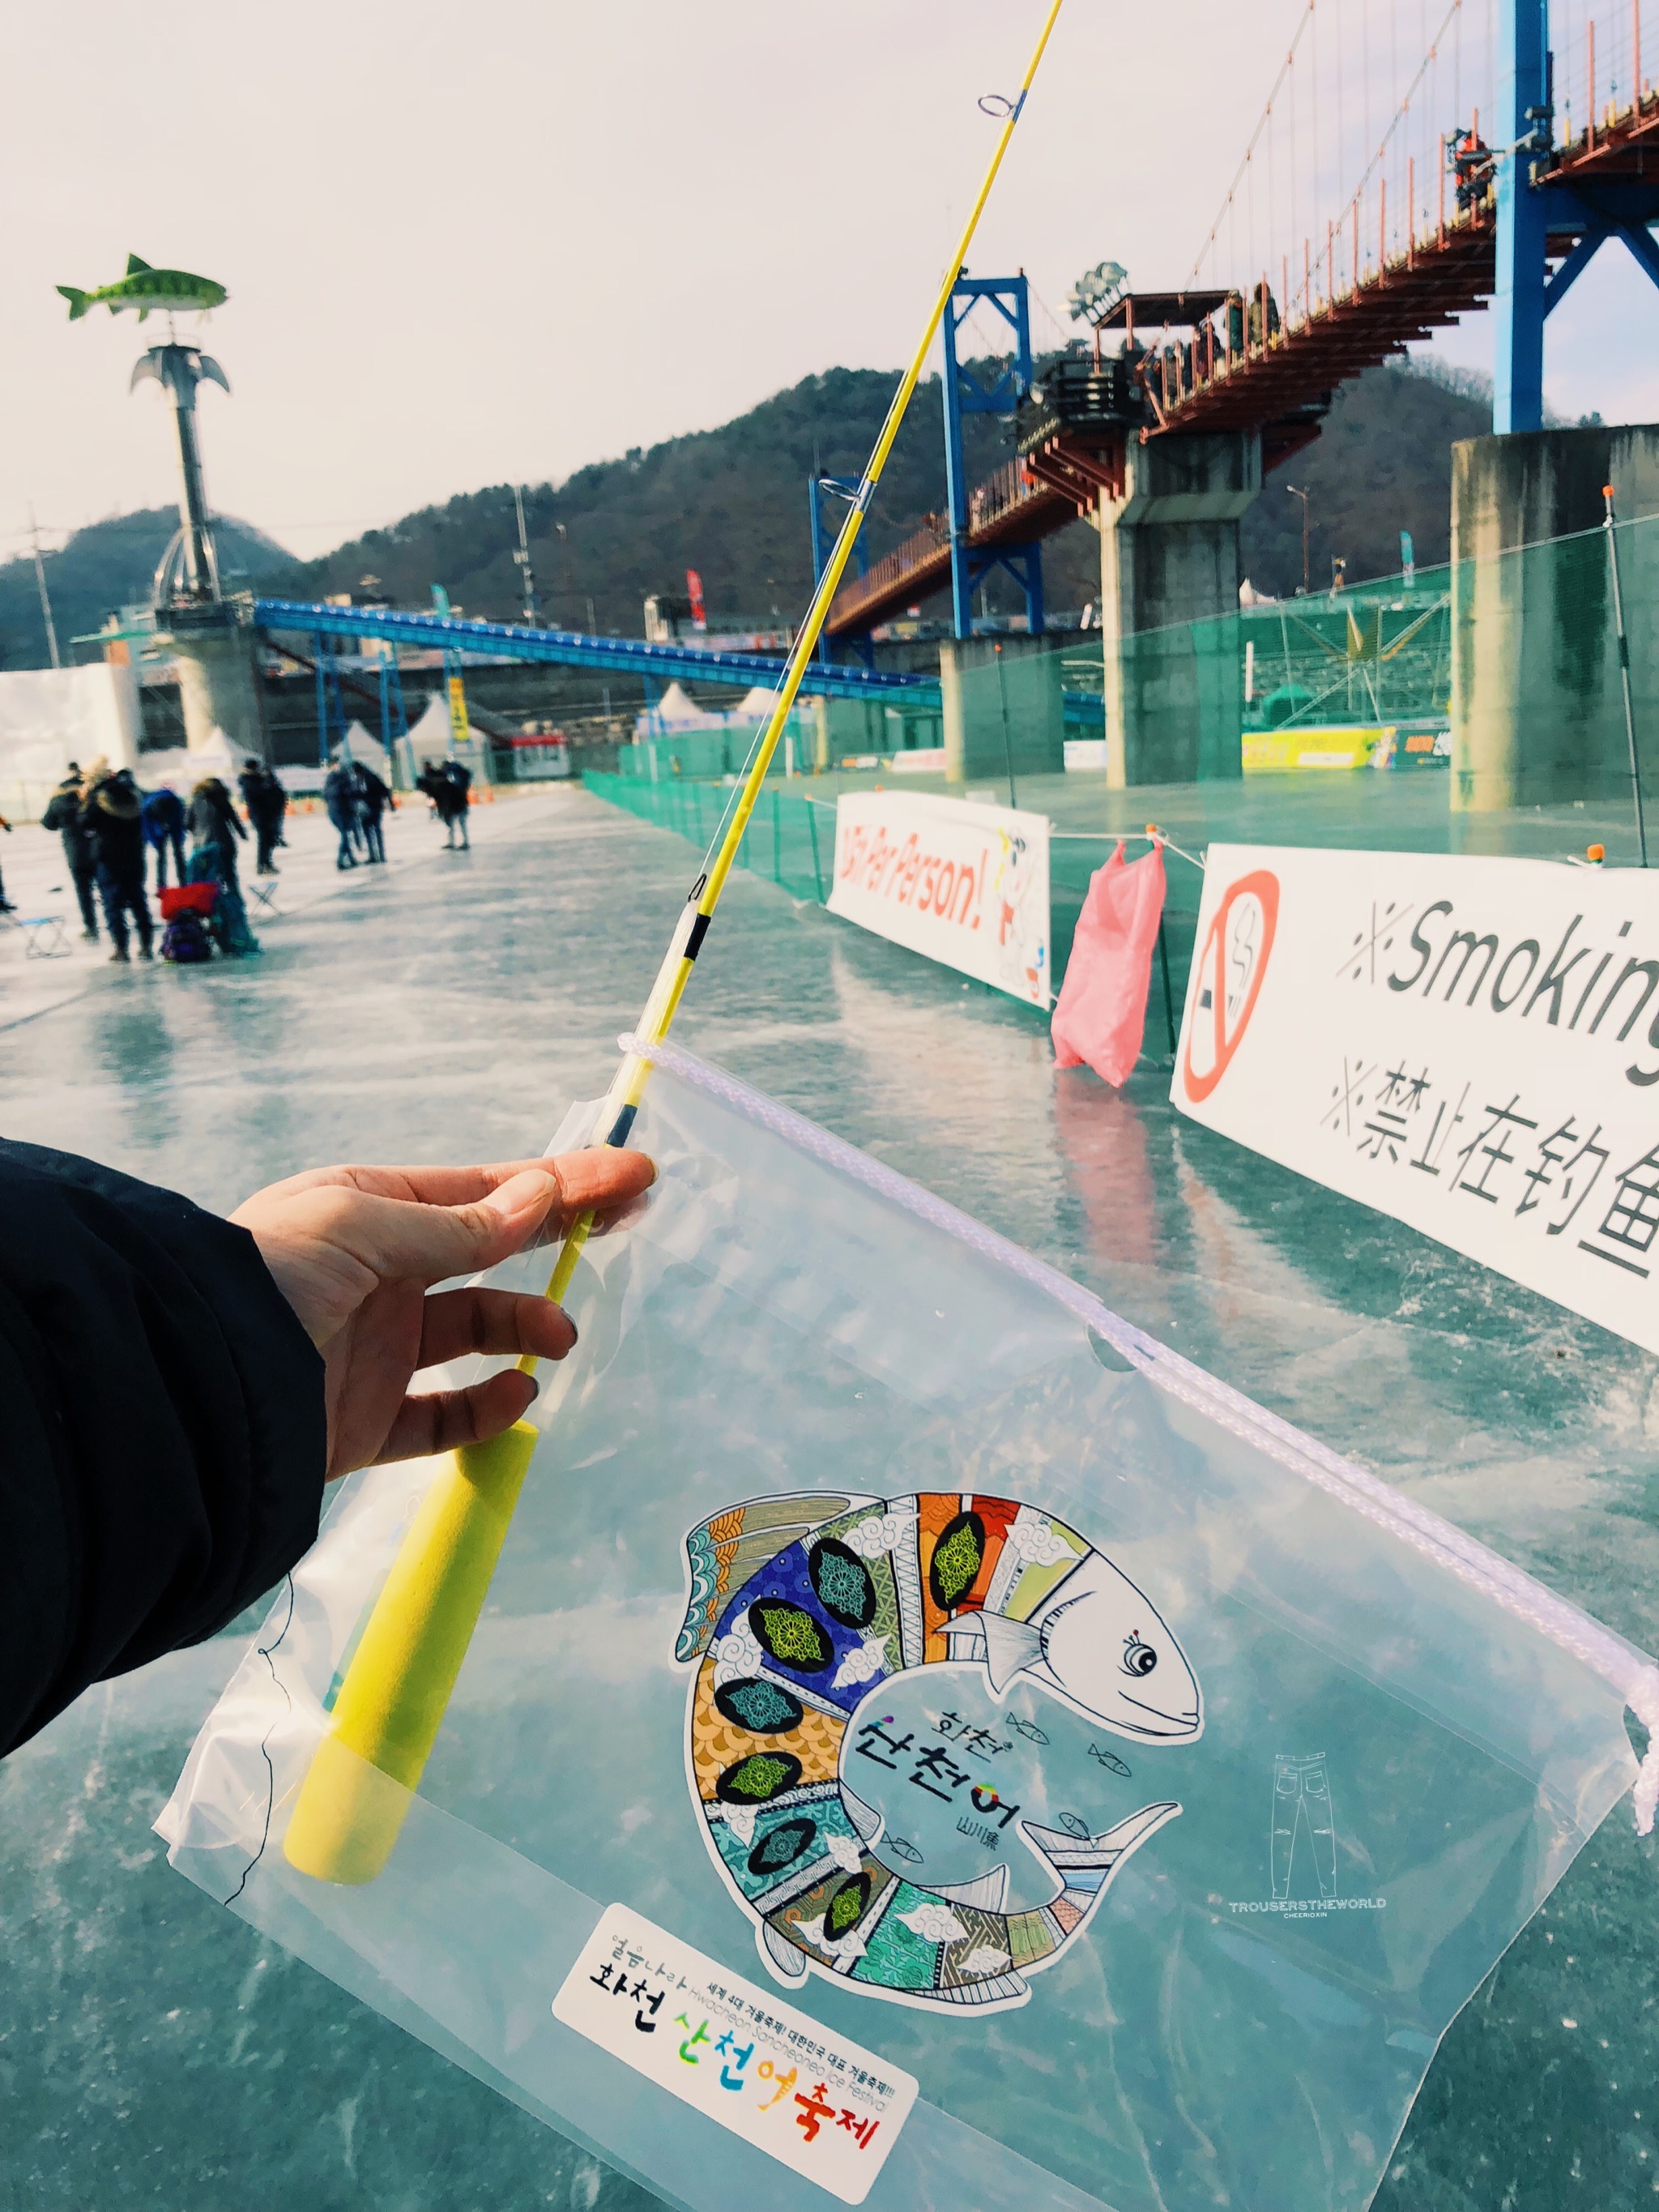 Hwacheon Sancheoneo Ice Festival 華川山鱒魚慶典